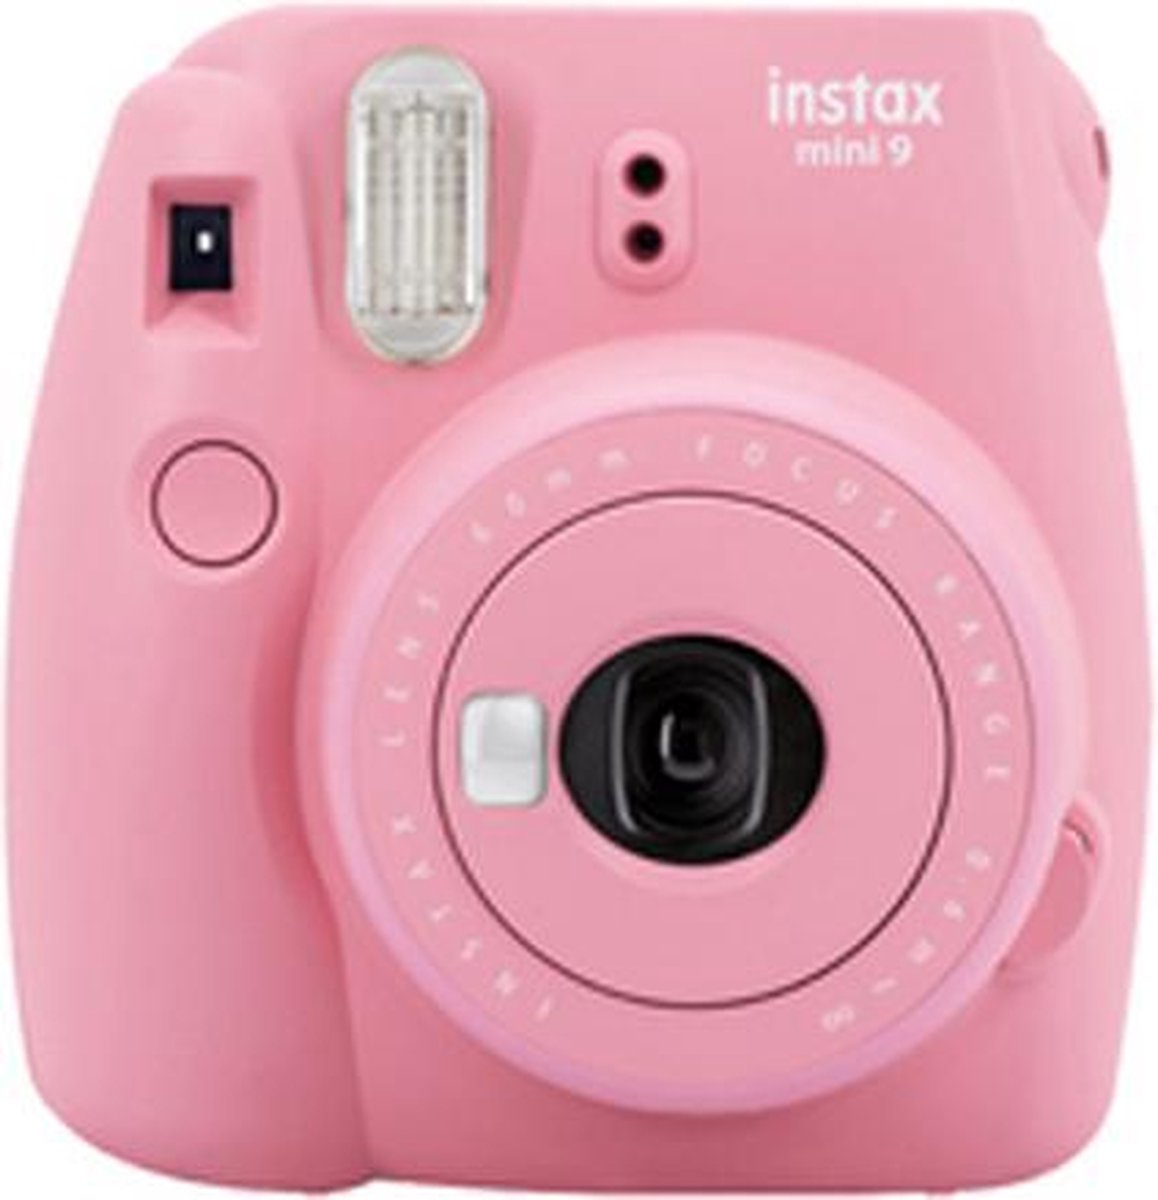 Classificeren bekennen in verlegenheid gebracht Fujifilm Instax Mini 9 - Flamingo Pink | bol.com